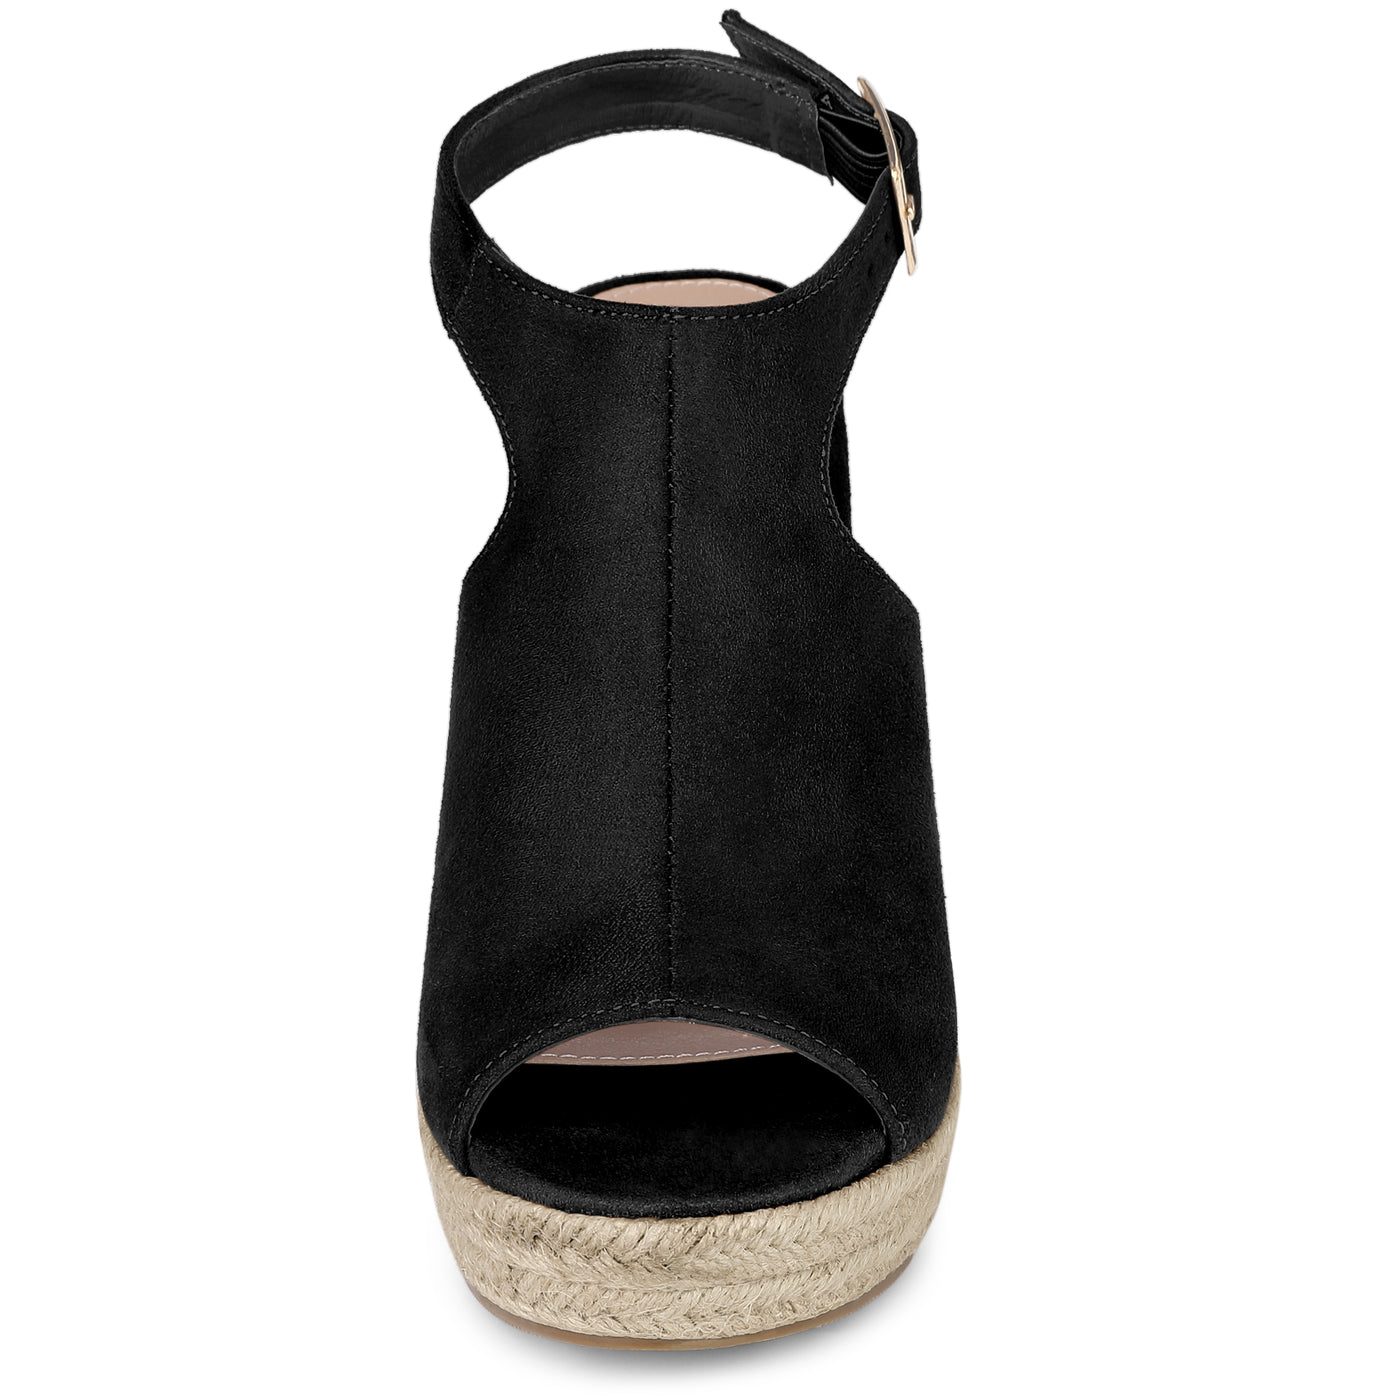 Allegra K Women's Peep Toe Slingback Platform Espadrilles Wedge Sandals